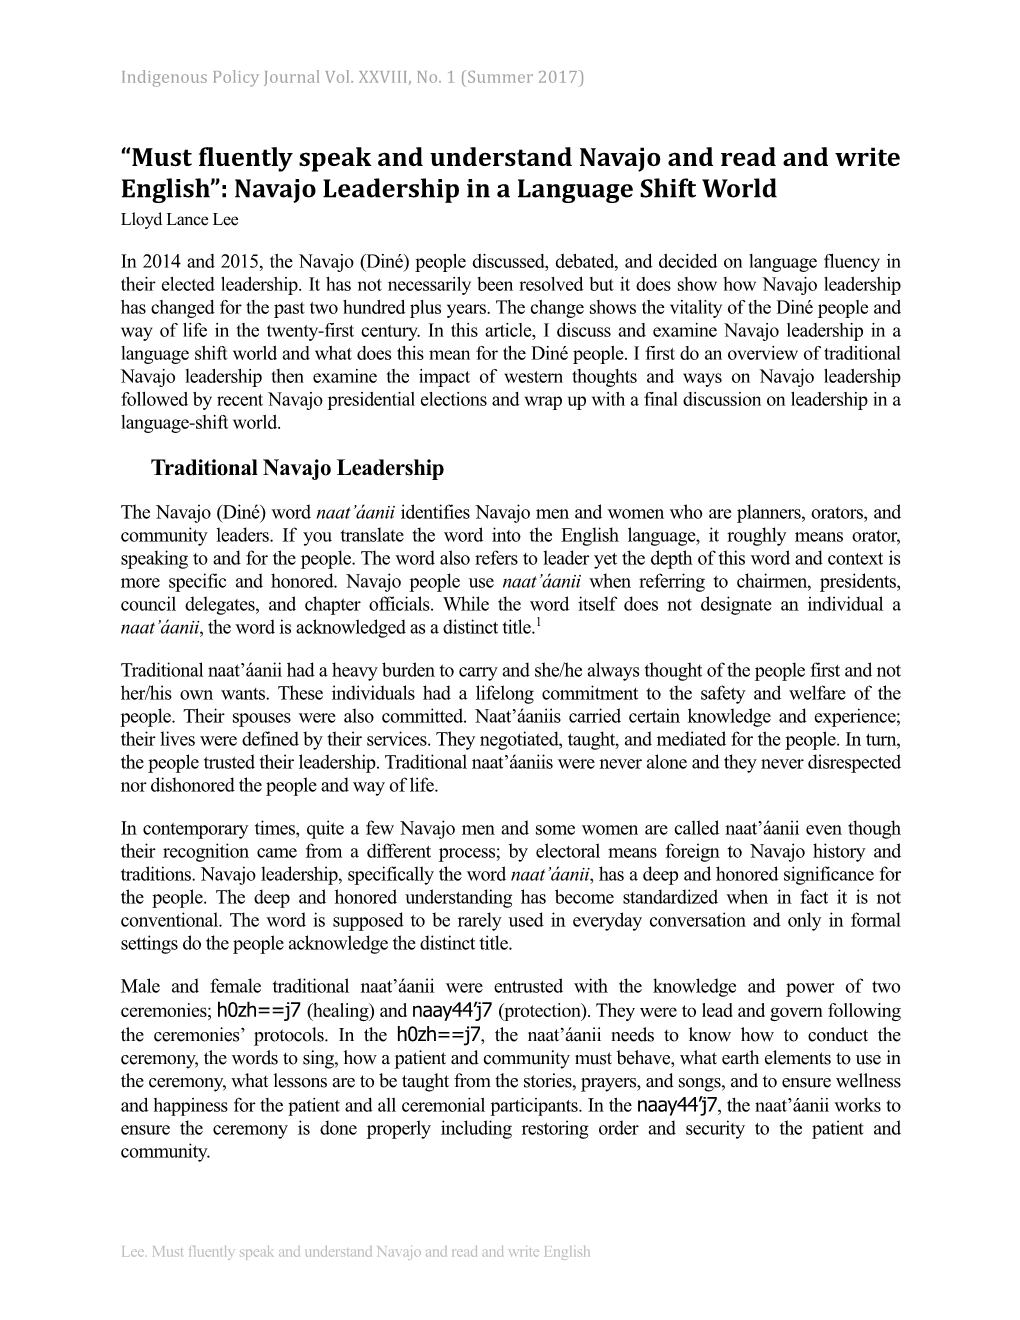 Navajo Leadership in a Language Shift World Lloyd Lance Lee